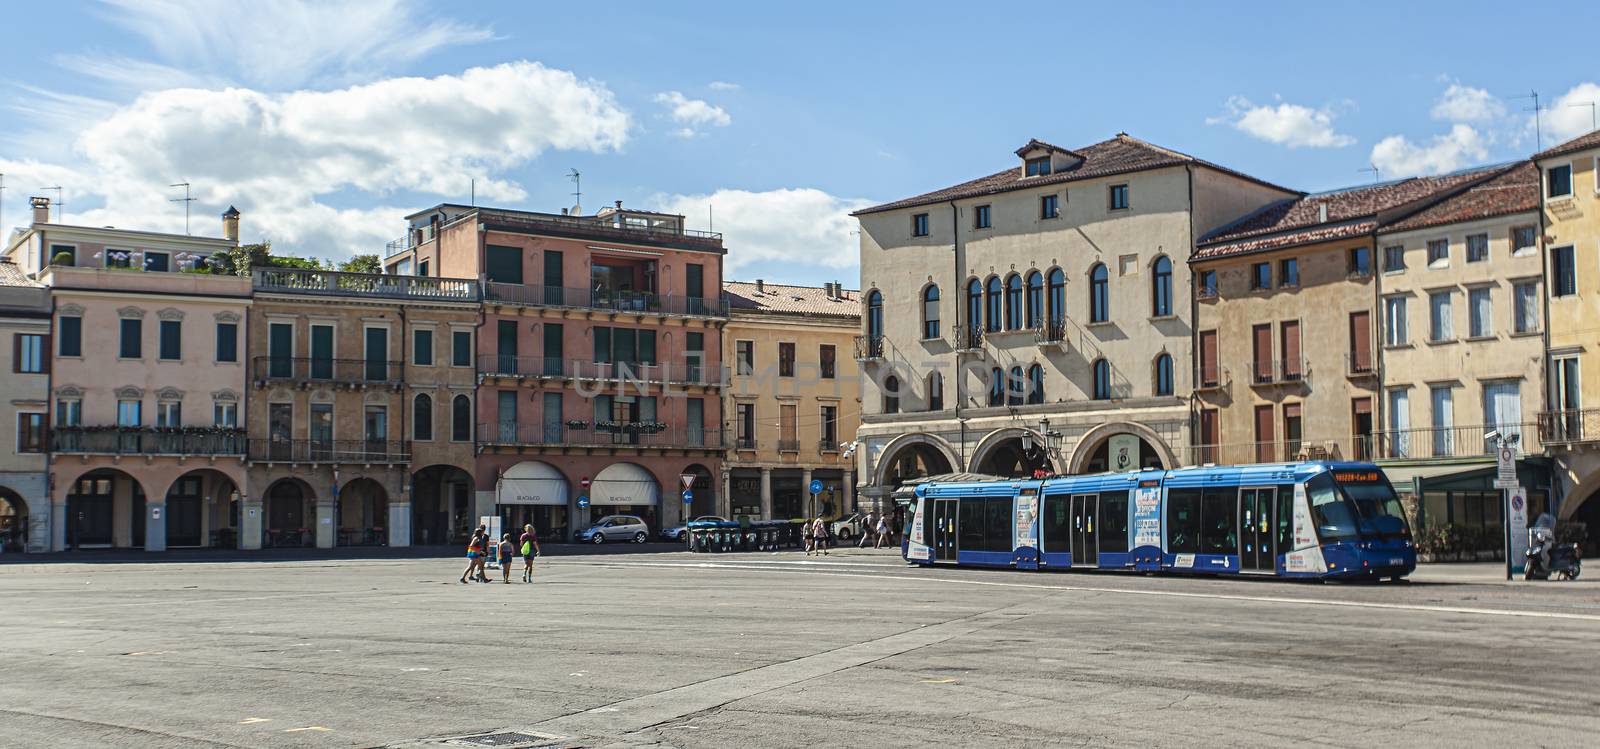 Padua city center by pippocarlot